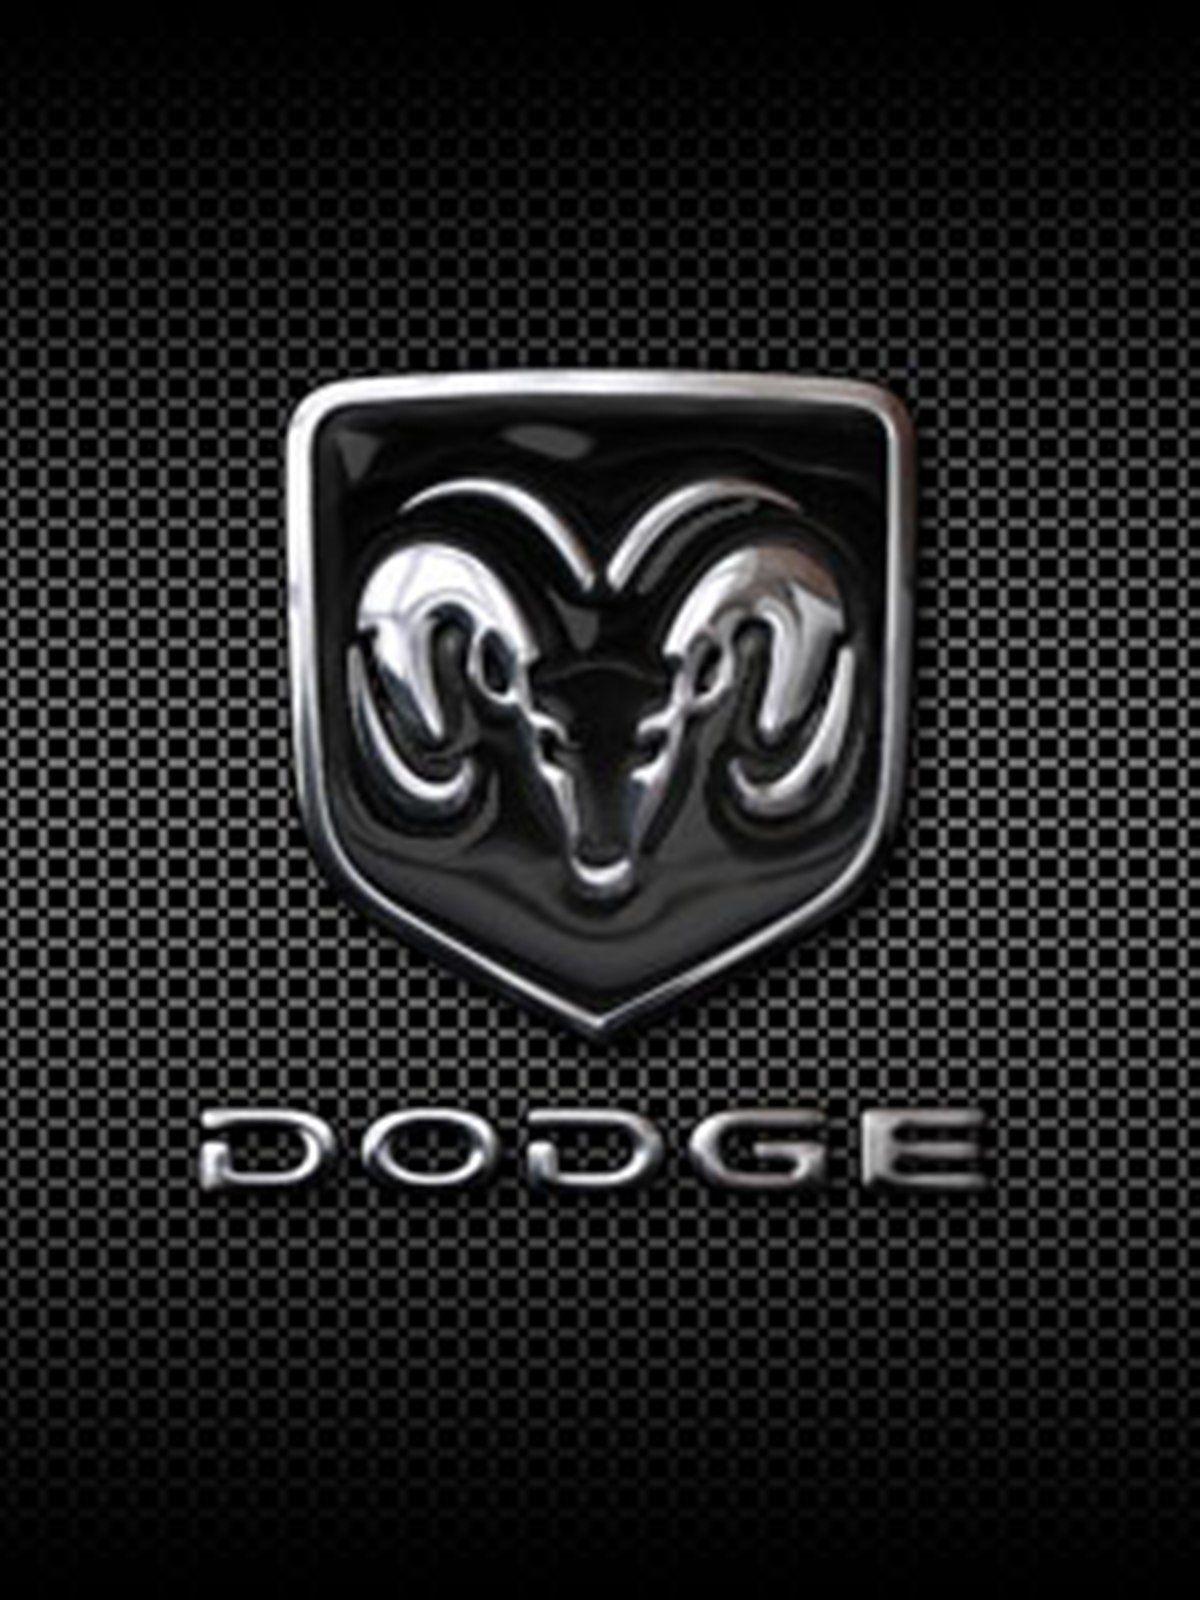 Dodge Logo - dodge logo wallpaper - Google Search | DΩDGΣ | Dodge, Dodge logo, Cars